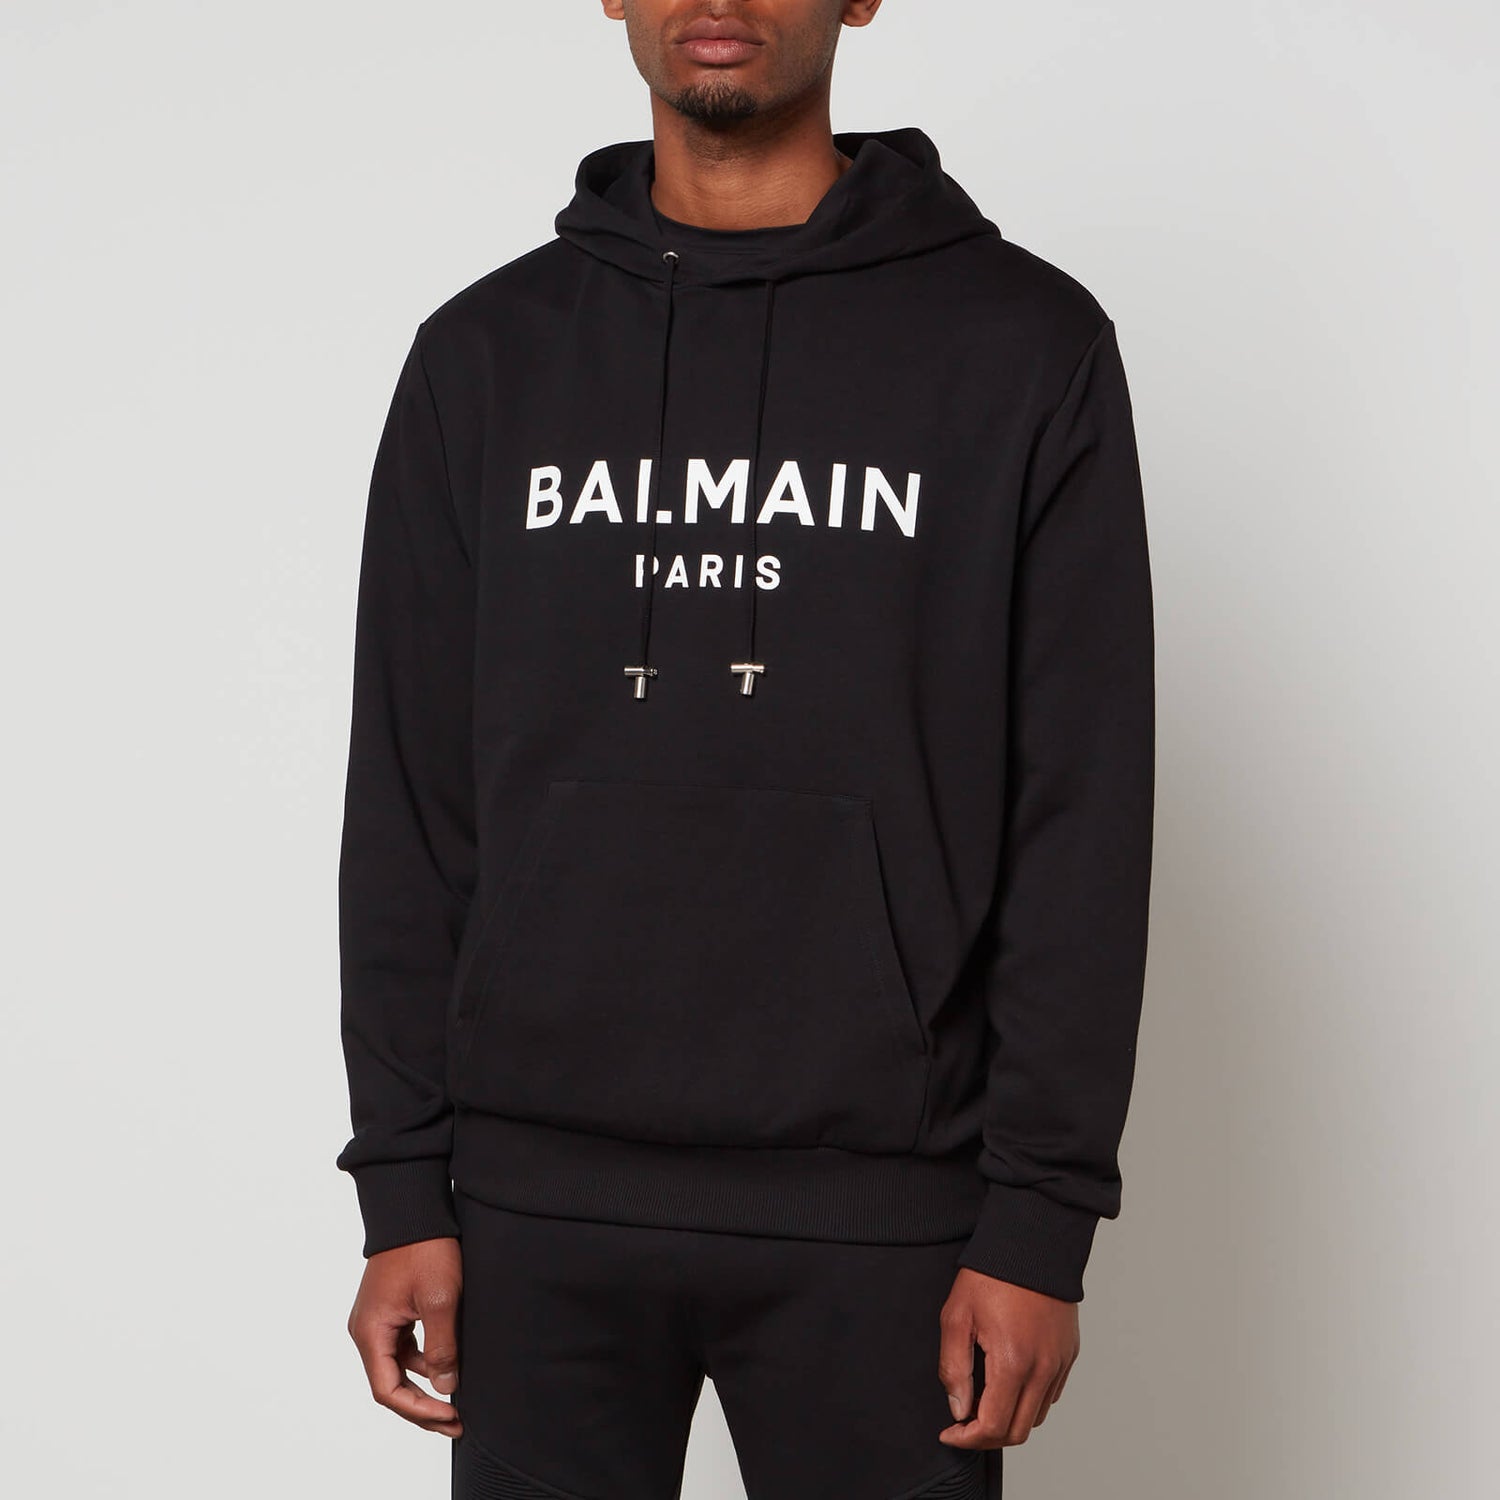 Balmain Men's Printed Hoodie - Black/White - S